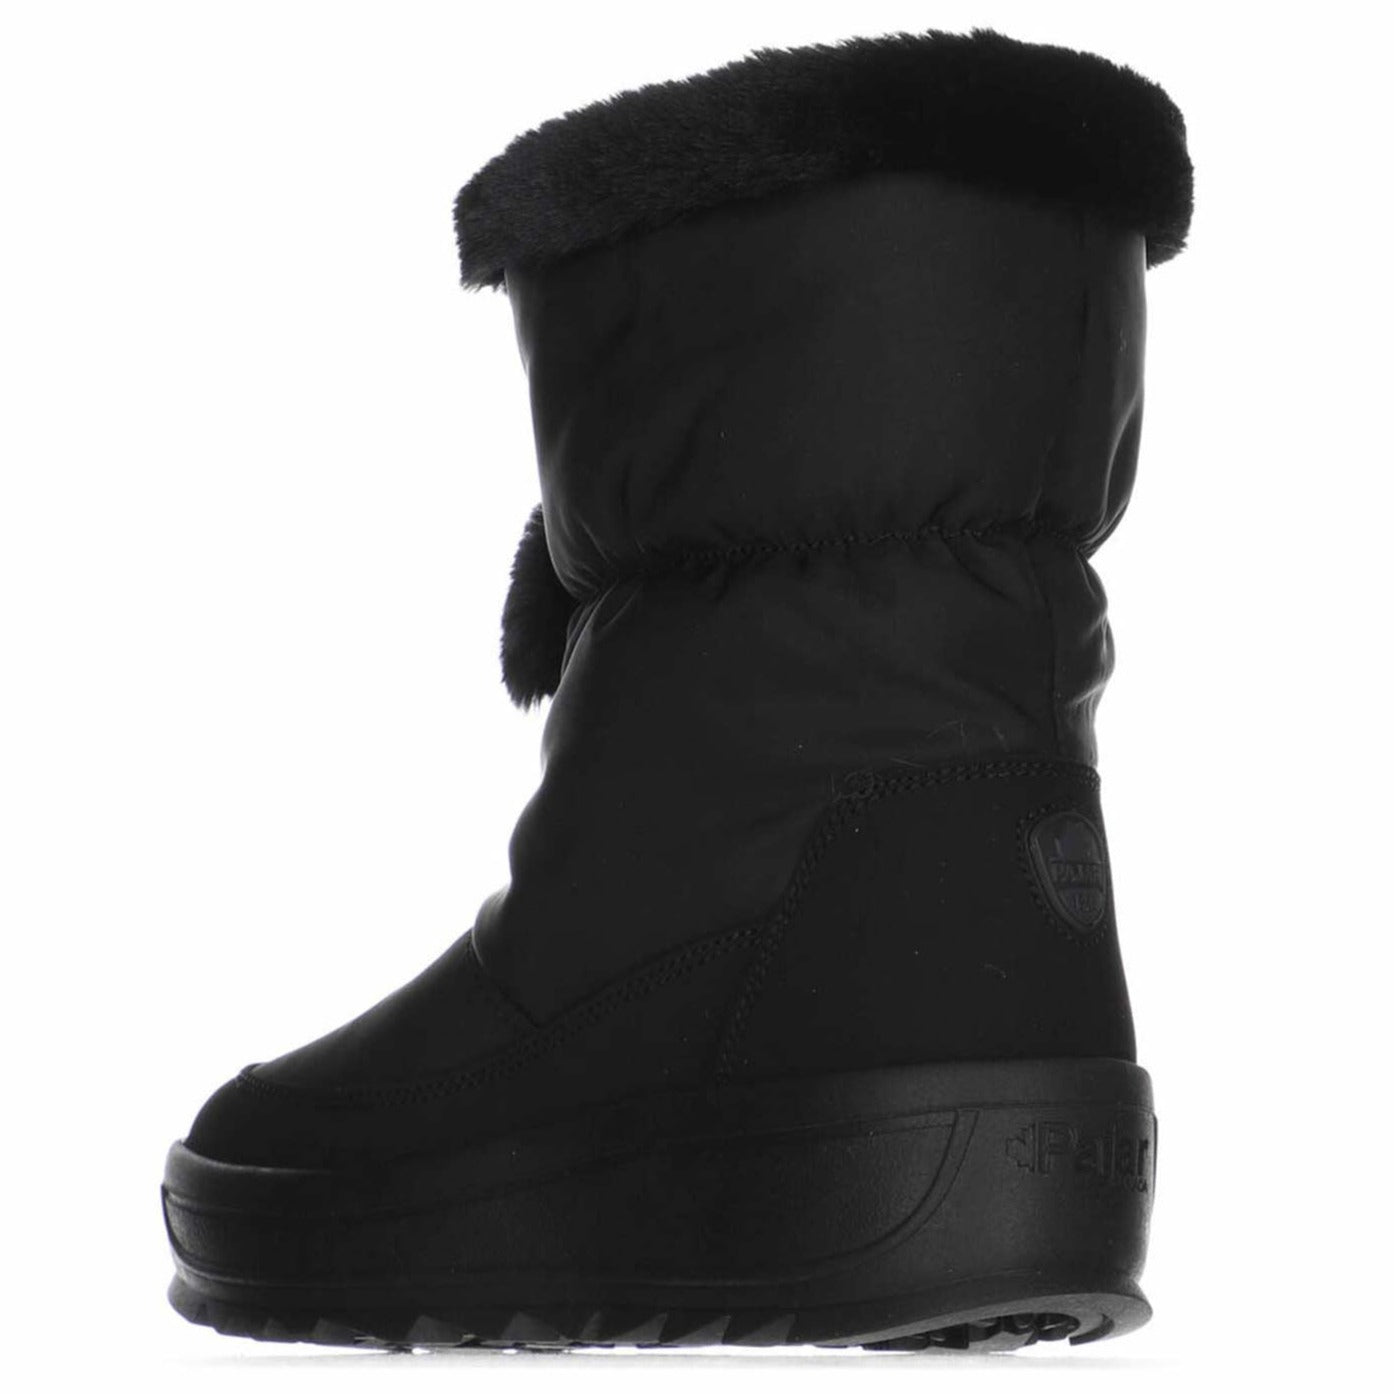 TOBY NYLON Women's Winter Boots